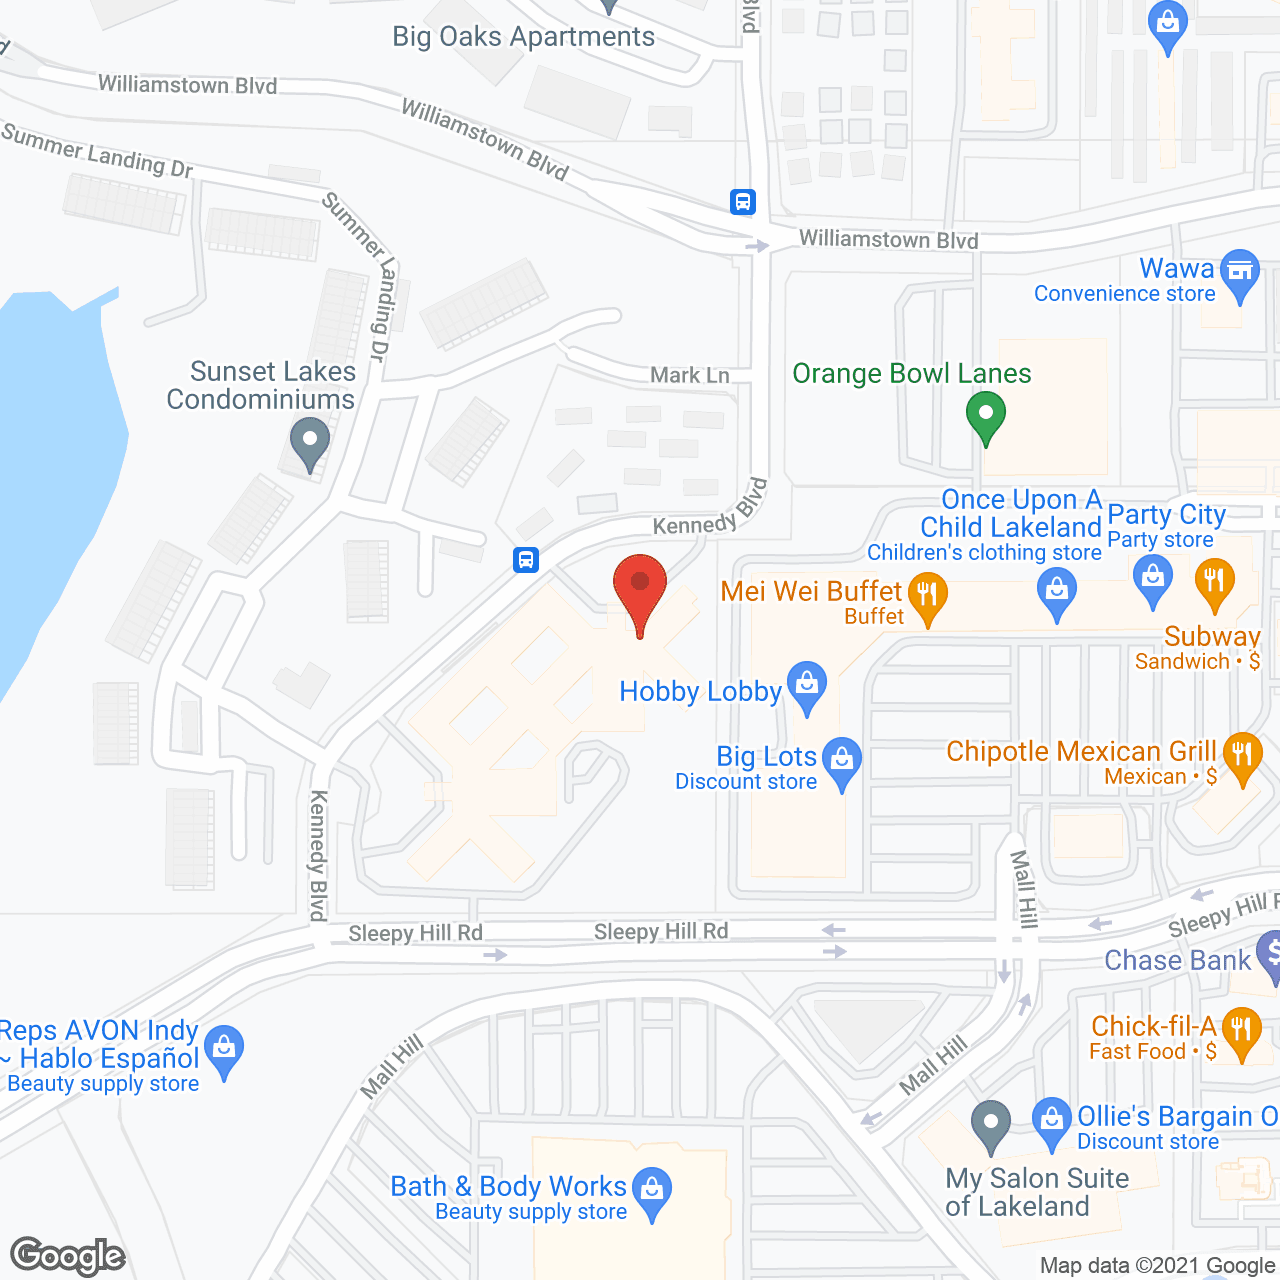 Lakeland Health Care Ctr in google map